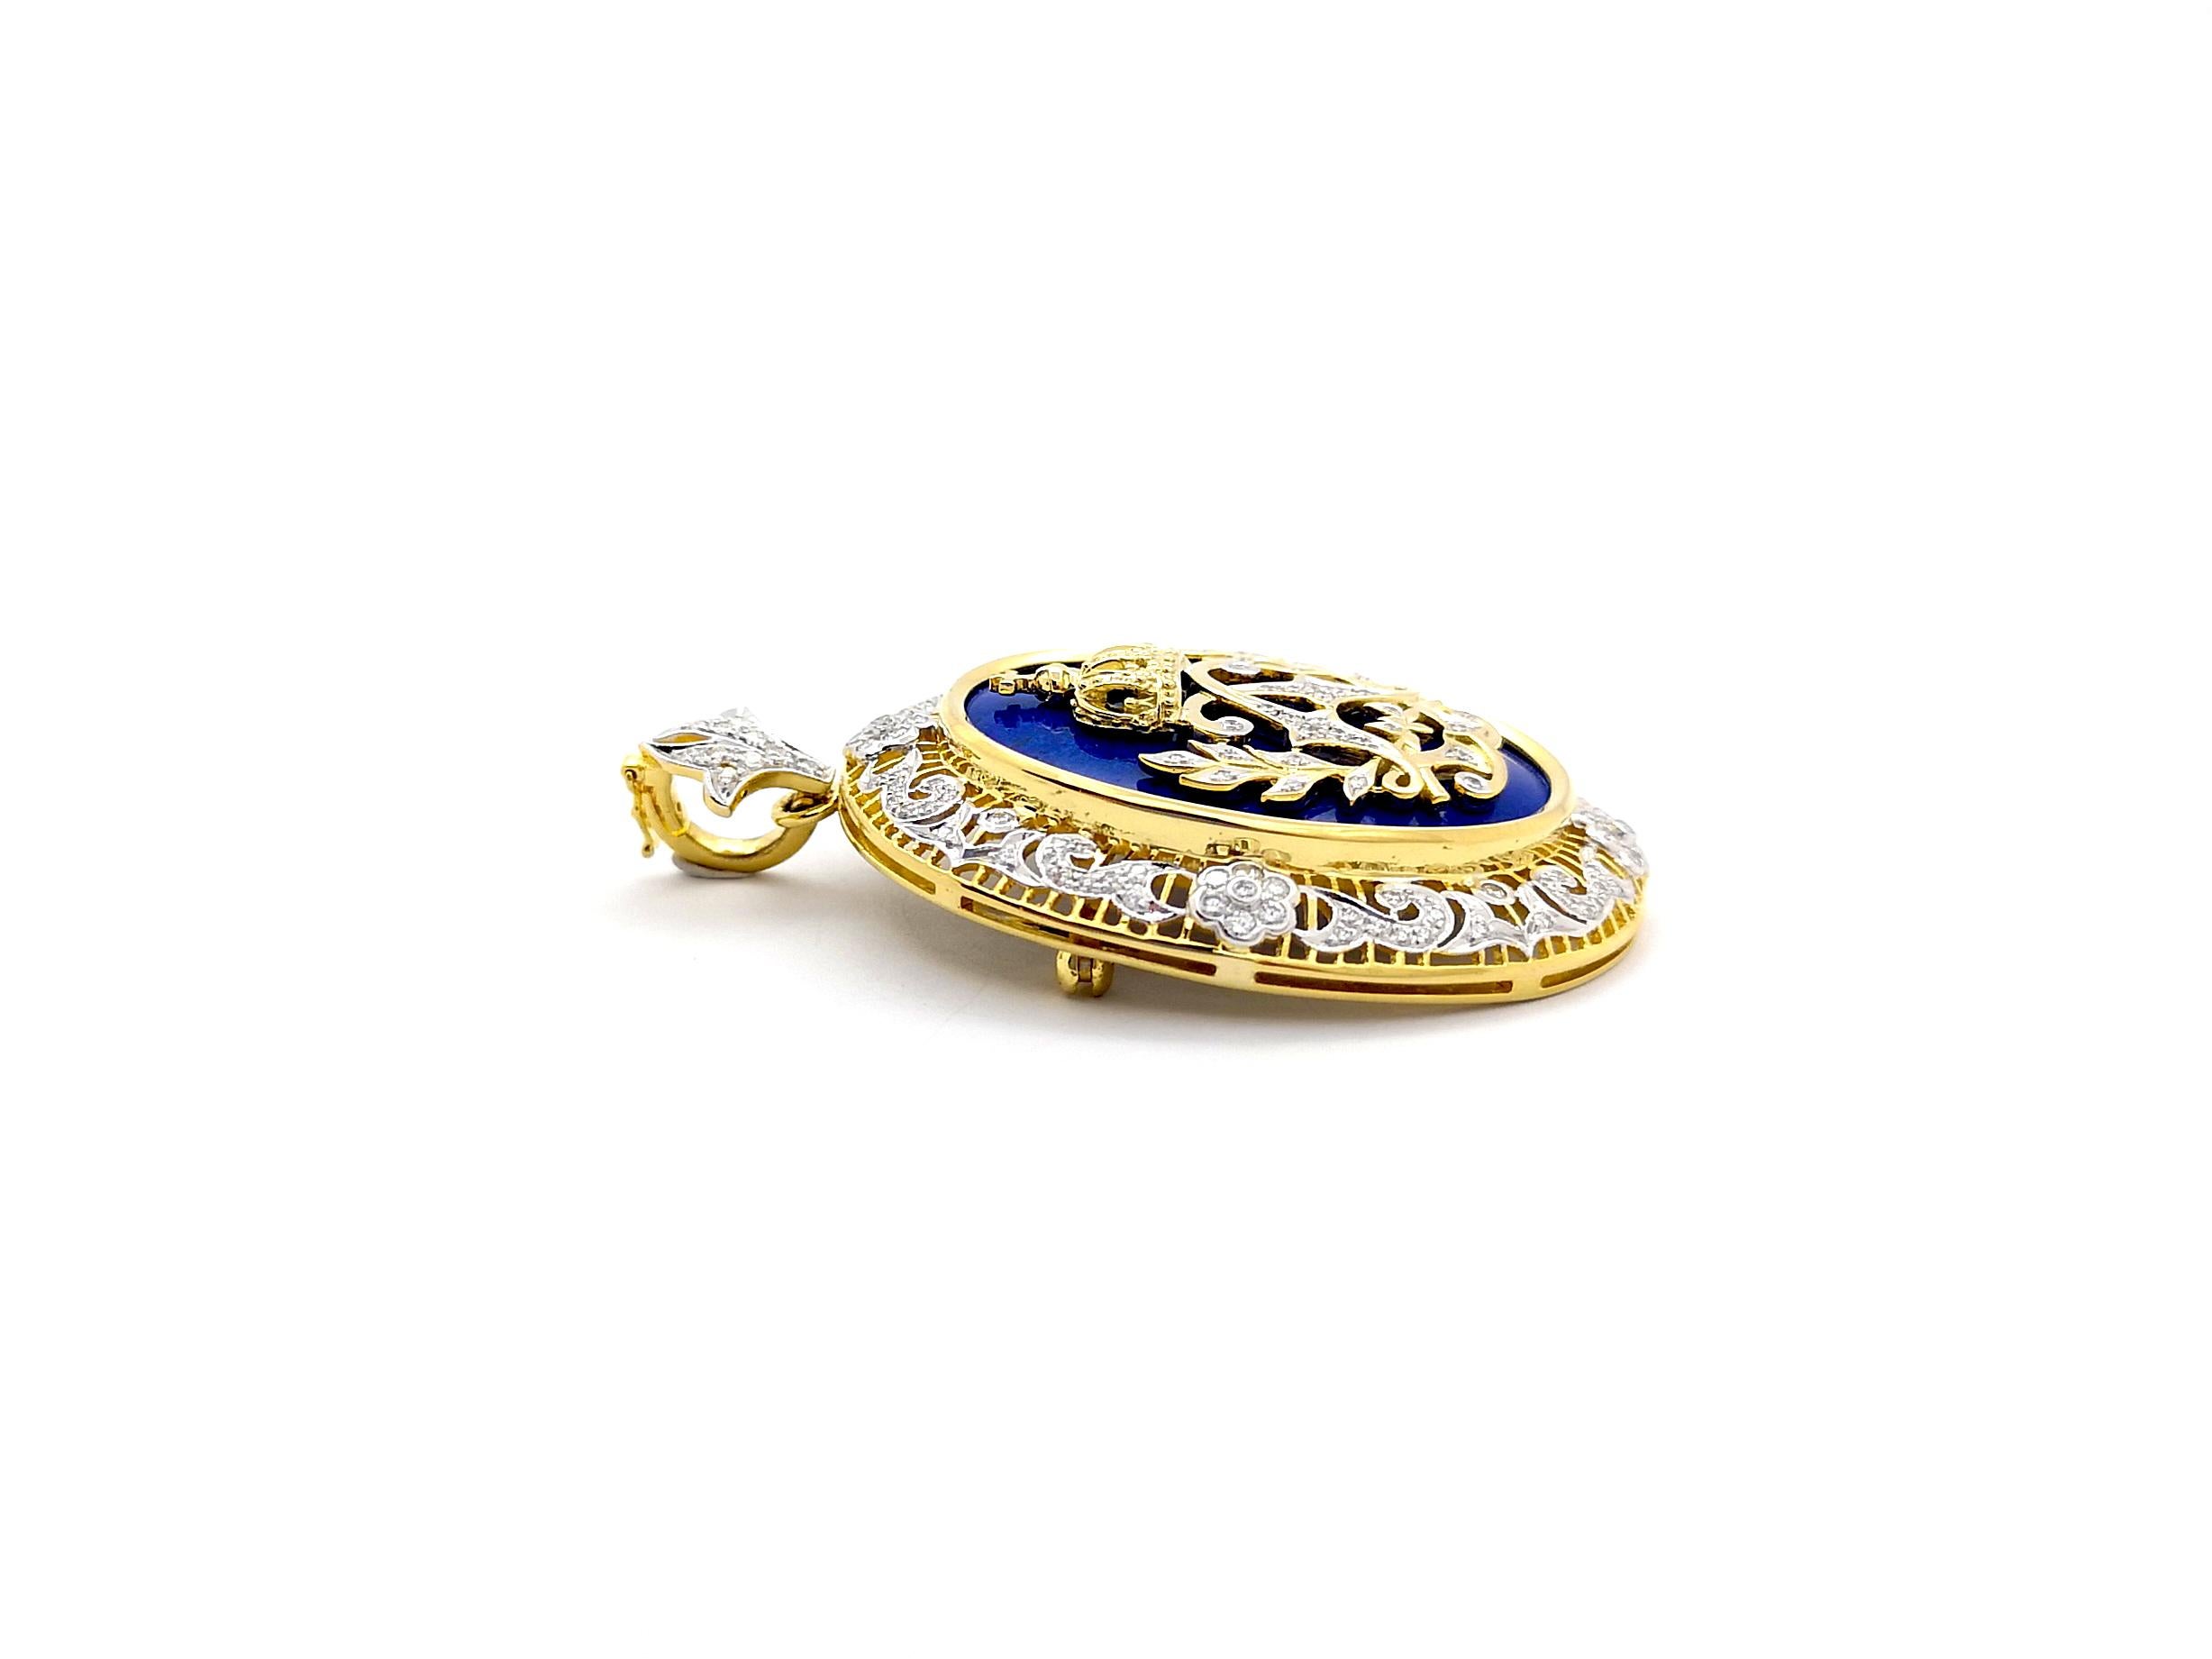 Lapiz Lazuli and Diamond Brooch/Pendant set in 18K Gold Settings For Sale 4